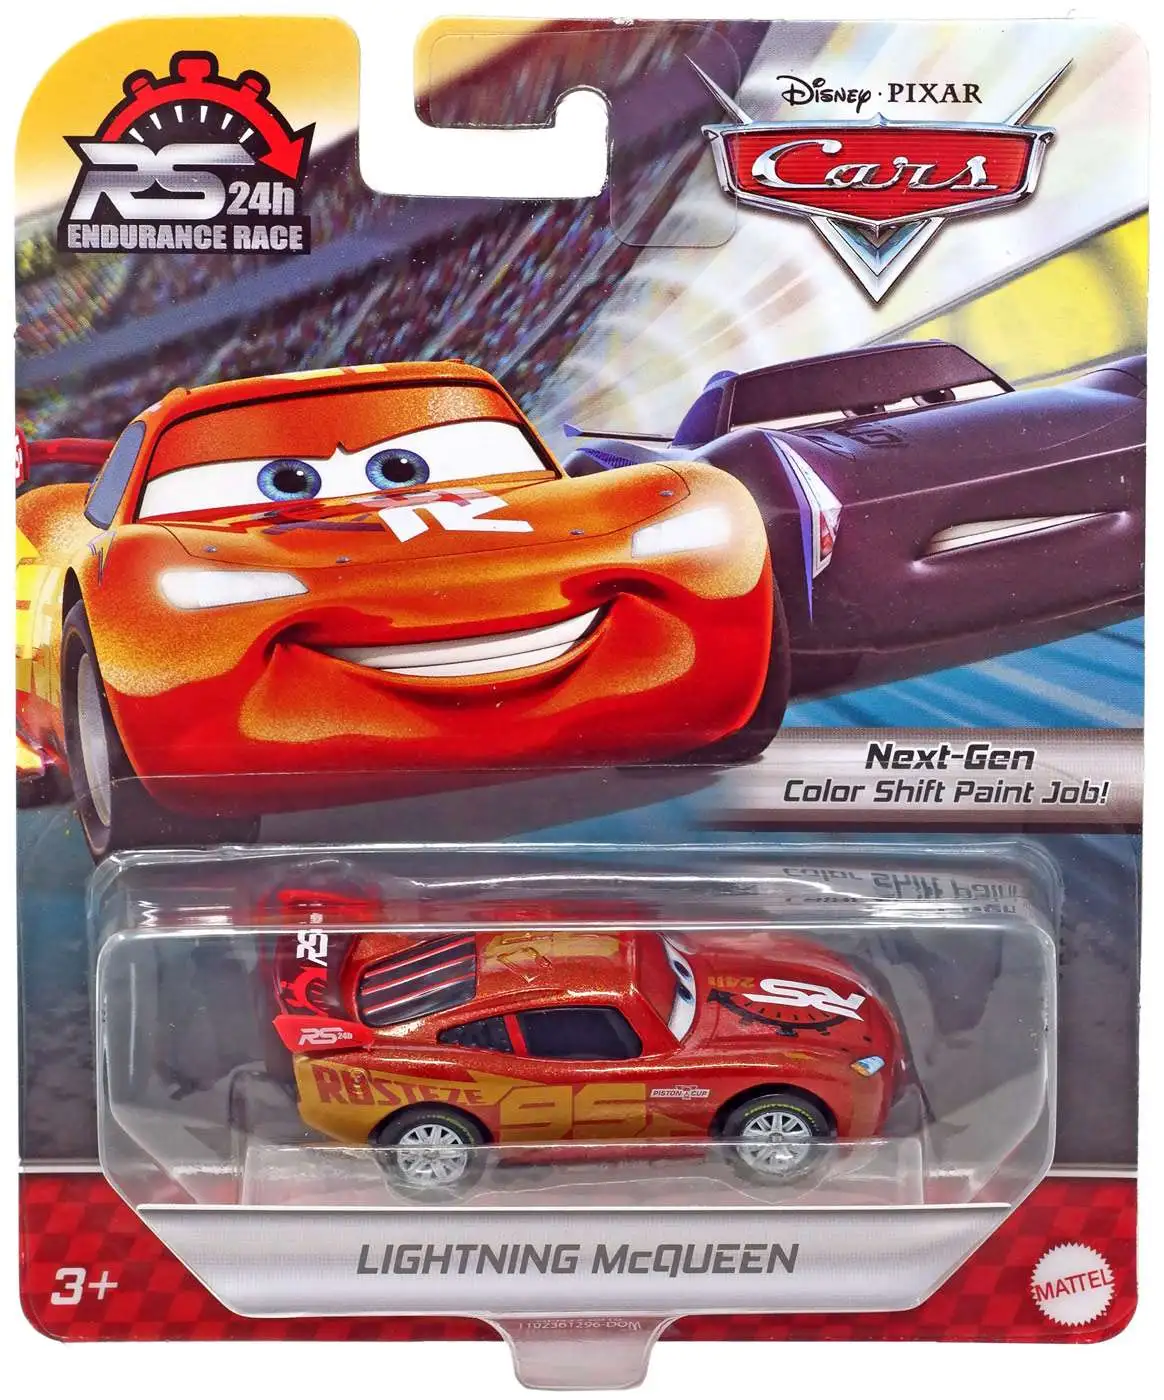 Disney Pixar Cars 3 Lightning McQueen Vehicle